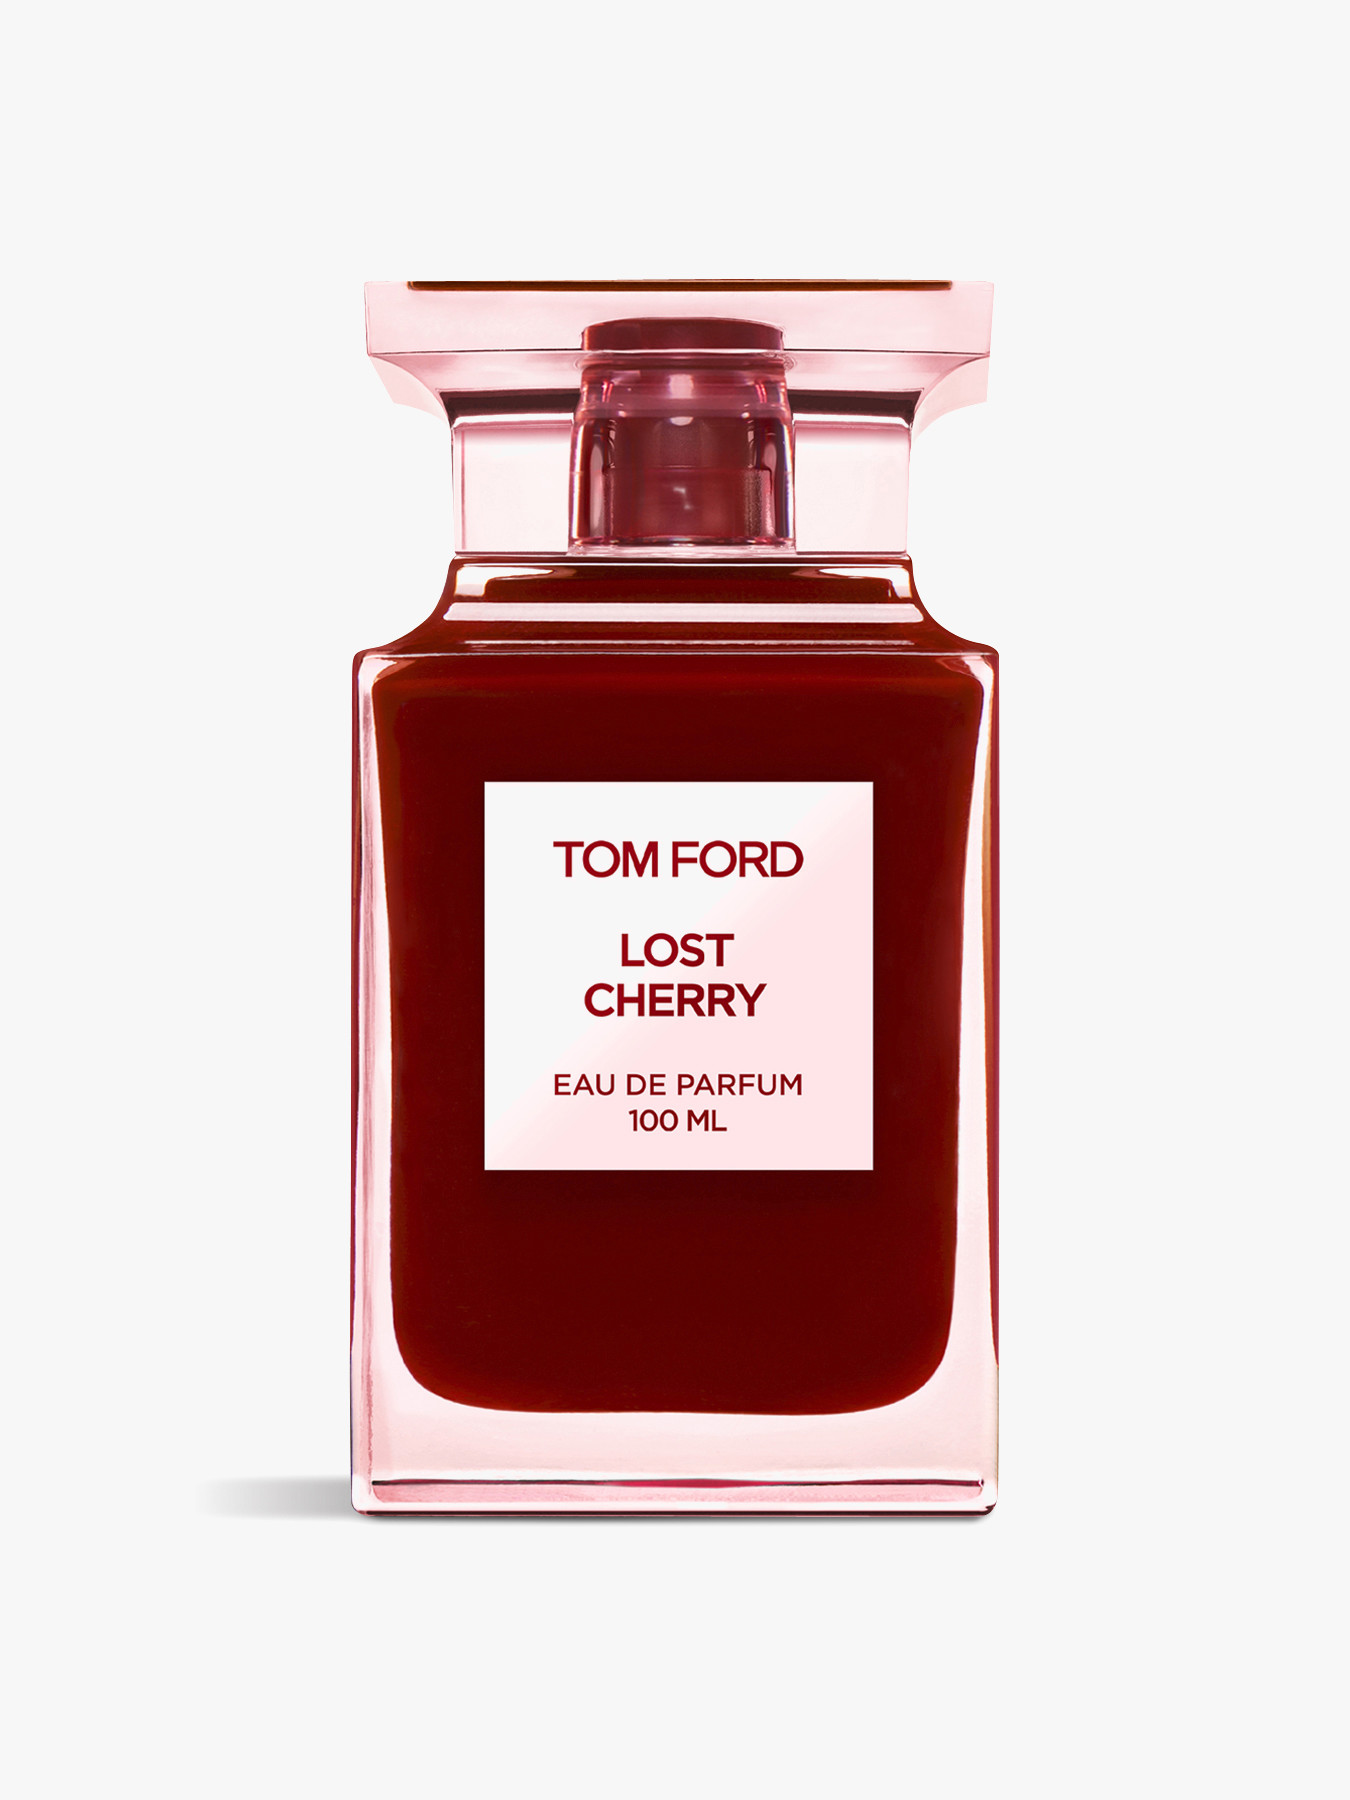 Tom Ford Lost Cherry Eau de Parfum 100 ml | Fenwick